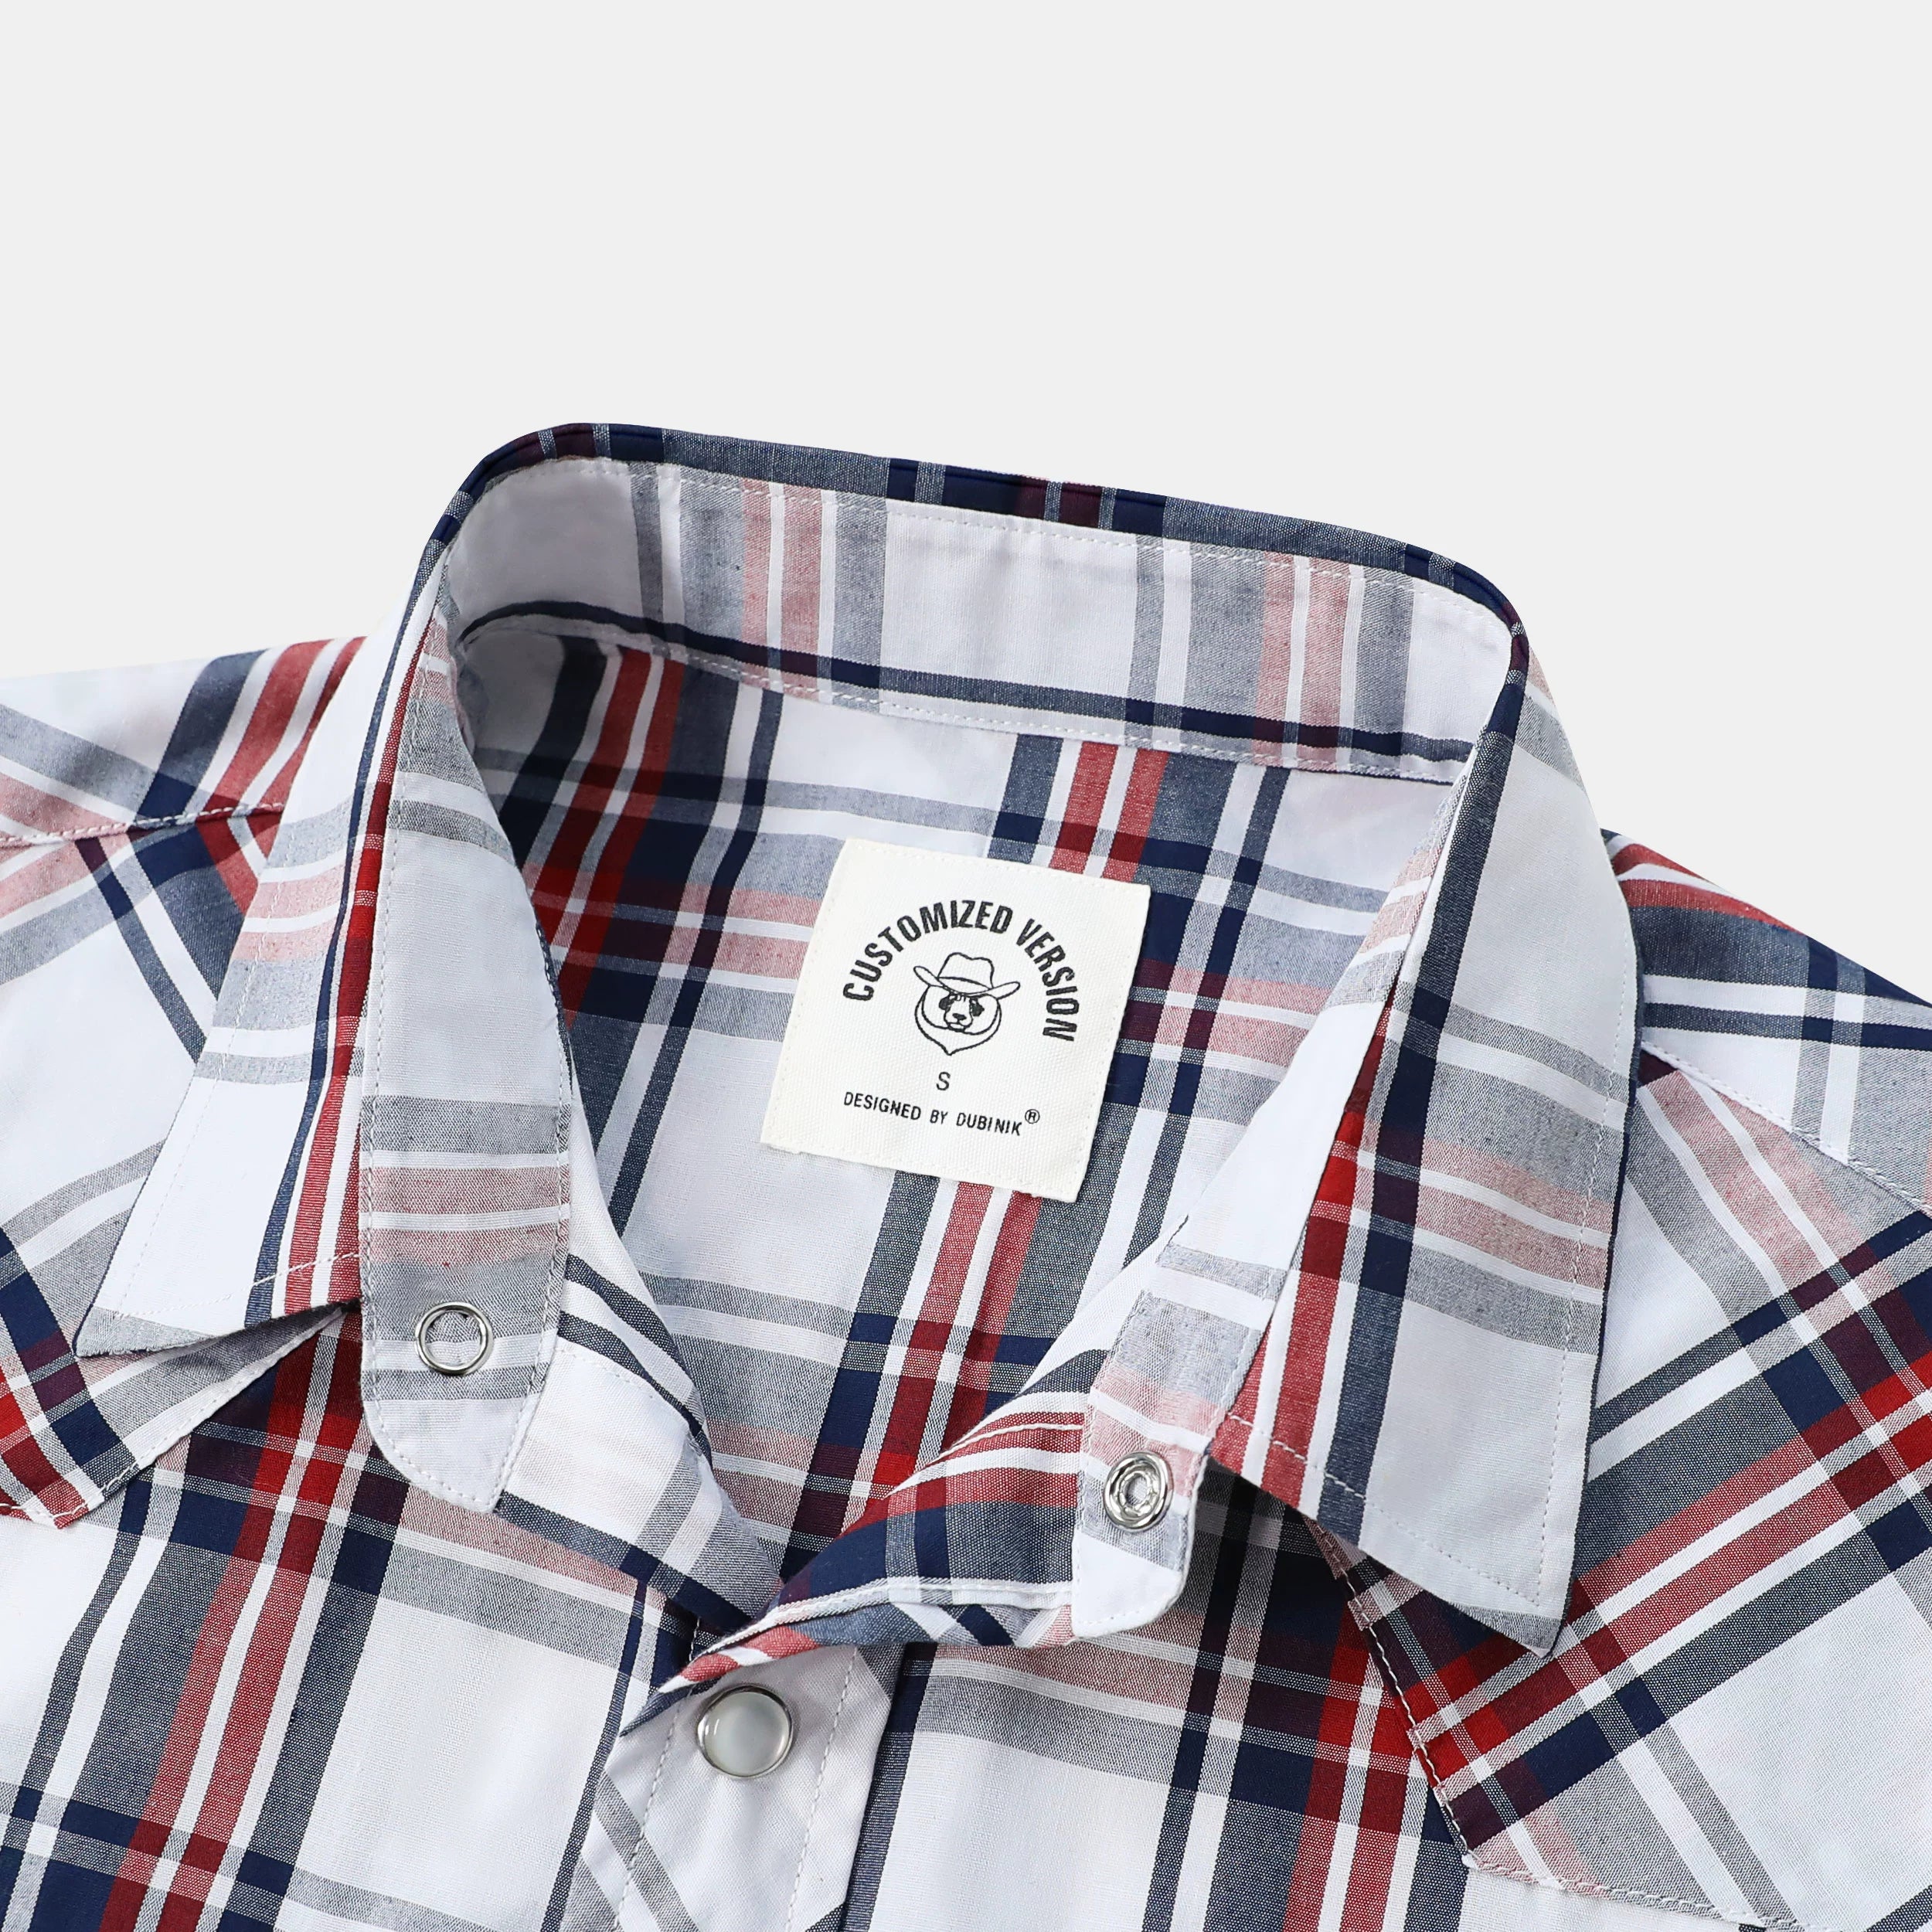 Dubinik® Western Shirts for Men Short Sleeve Plaid Pearl Snap Shirts for Men Button Up Shirt Cowboy Casual Work Shirt#41025